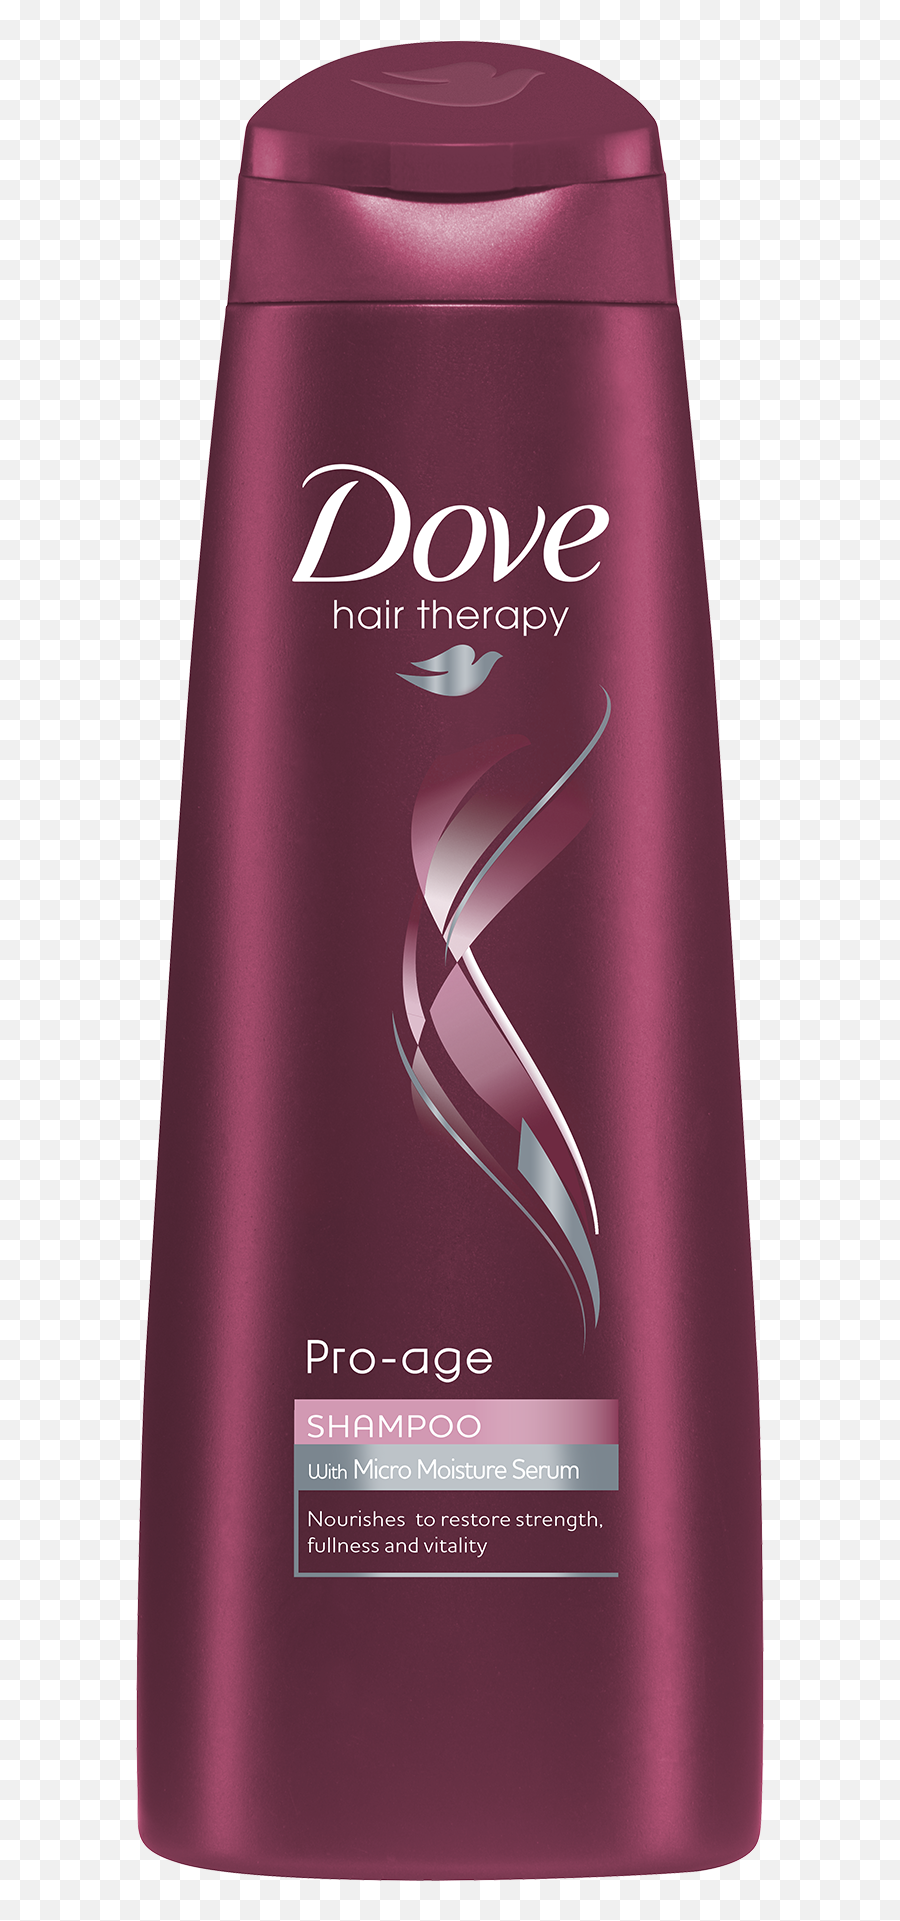 Shampoo Icon Png 91104 - Web Icons Png Dove Shampoo Pro Age 250ml,Transparent Shampoo Icon